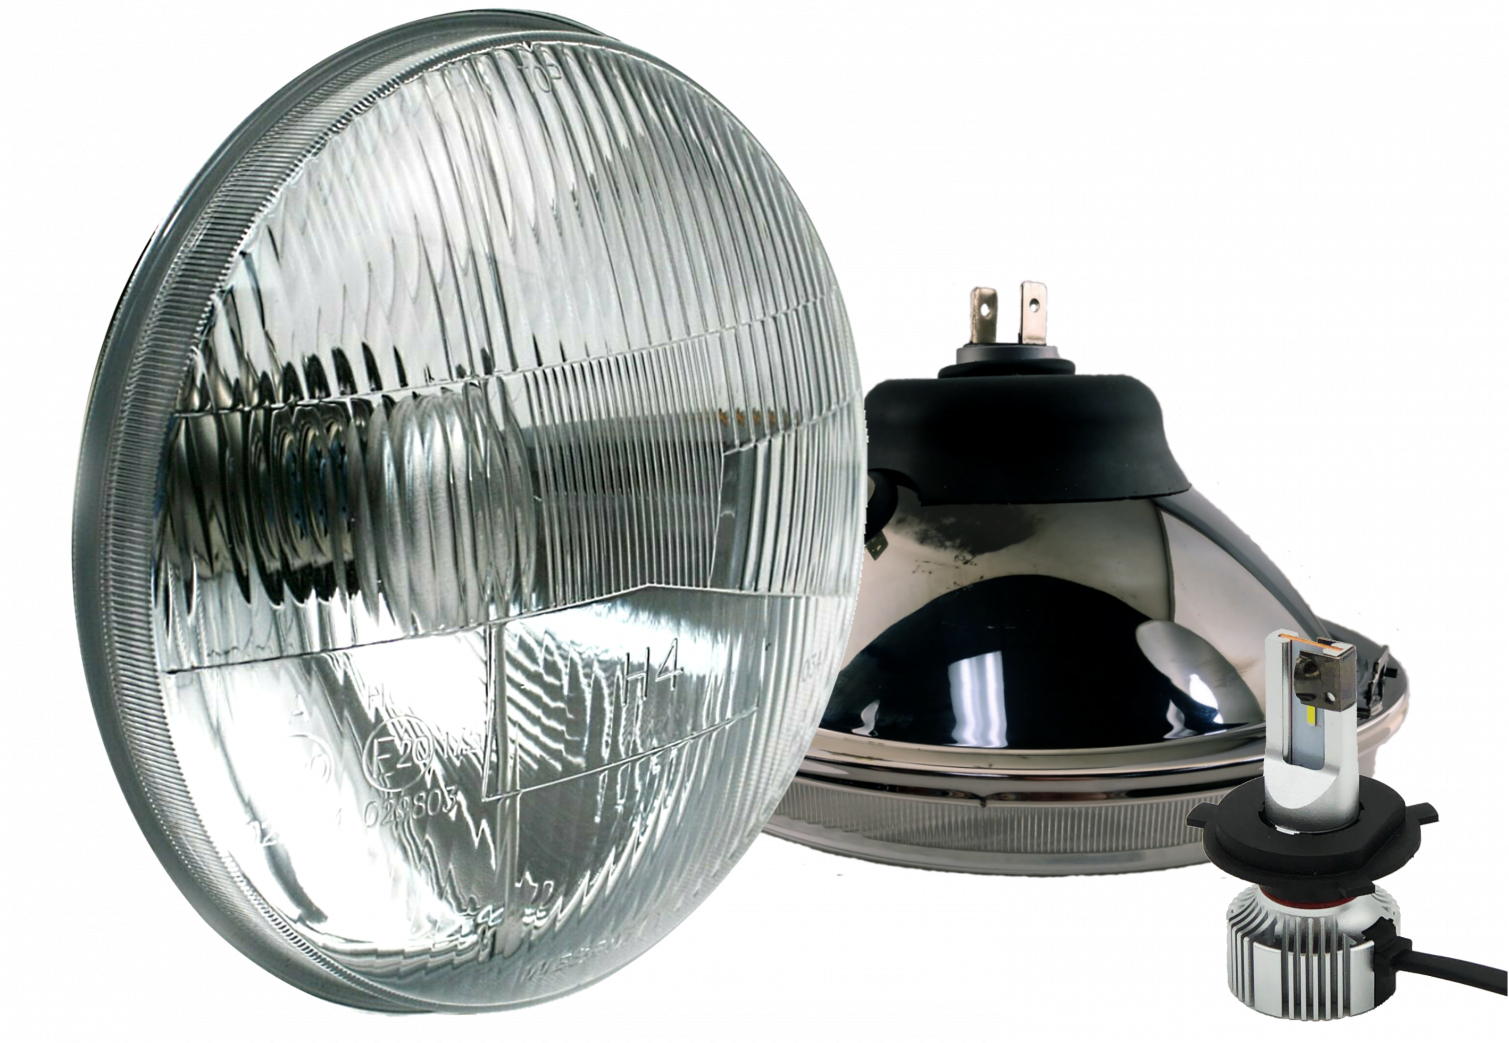 Classic 7 inch LED Headlight (SINGLE)